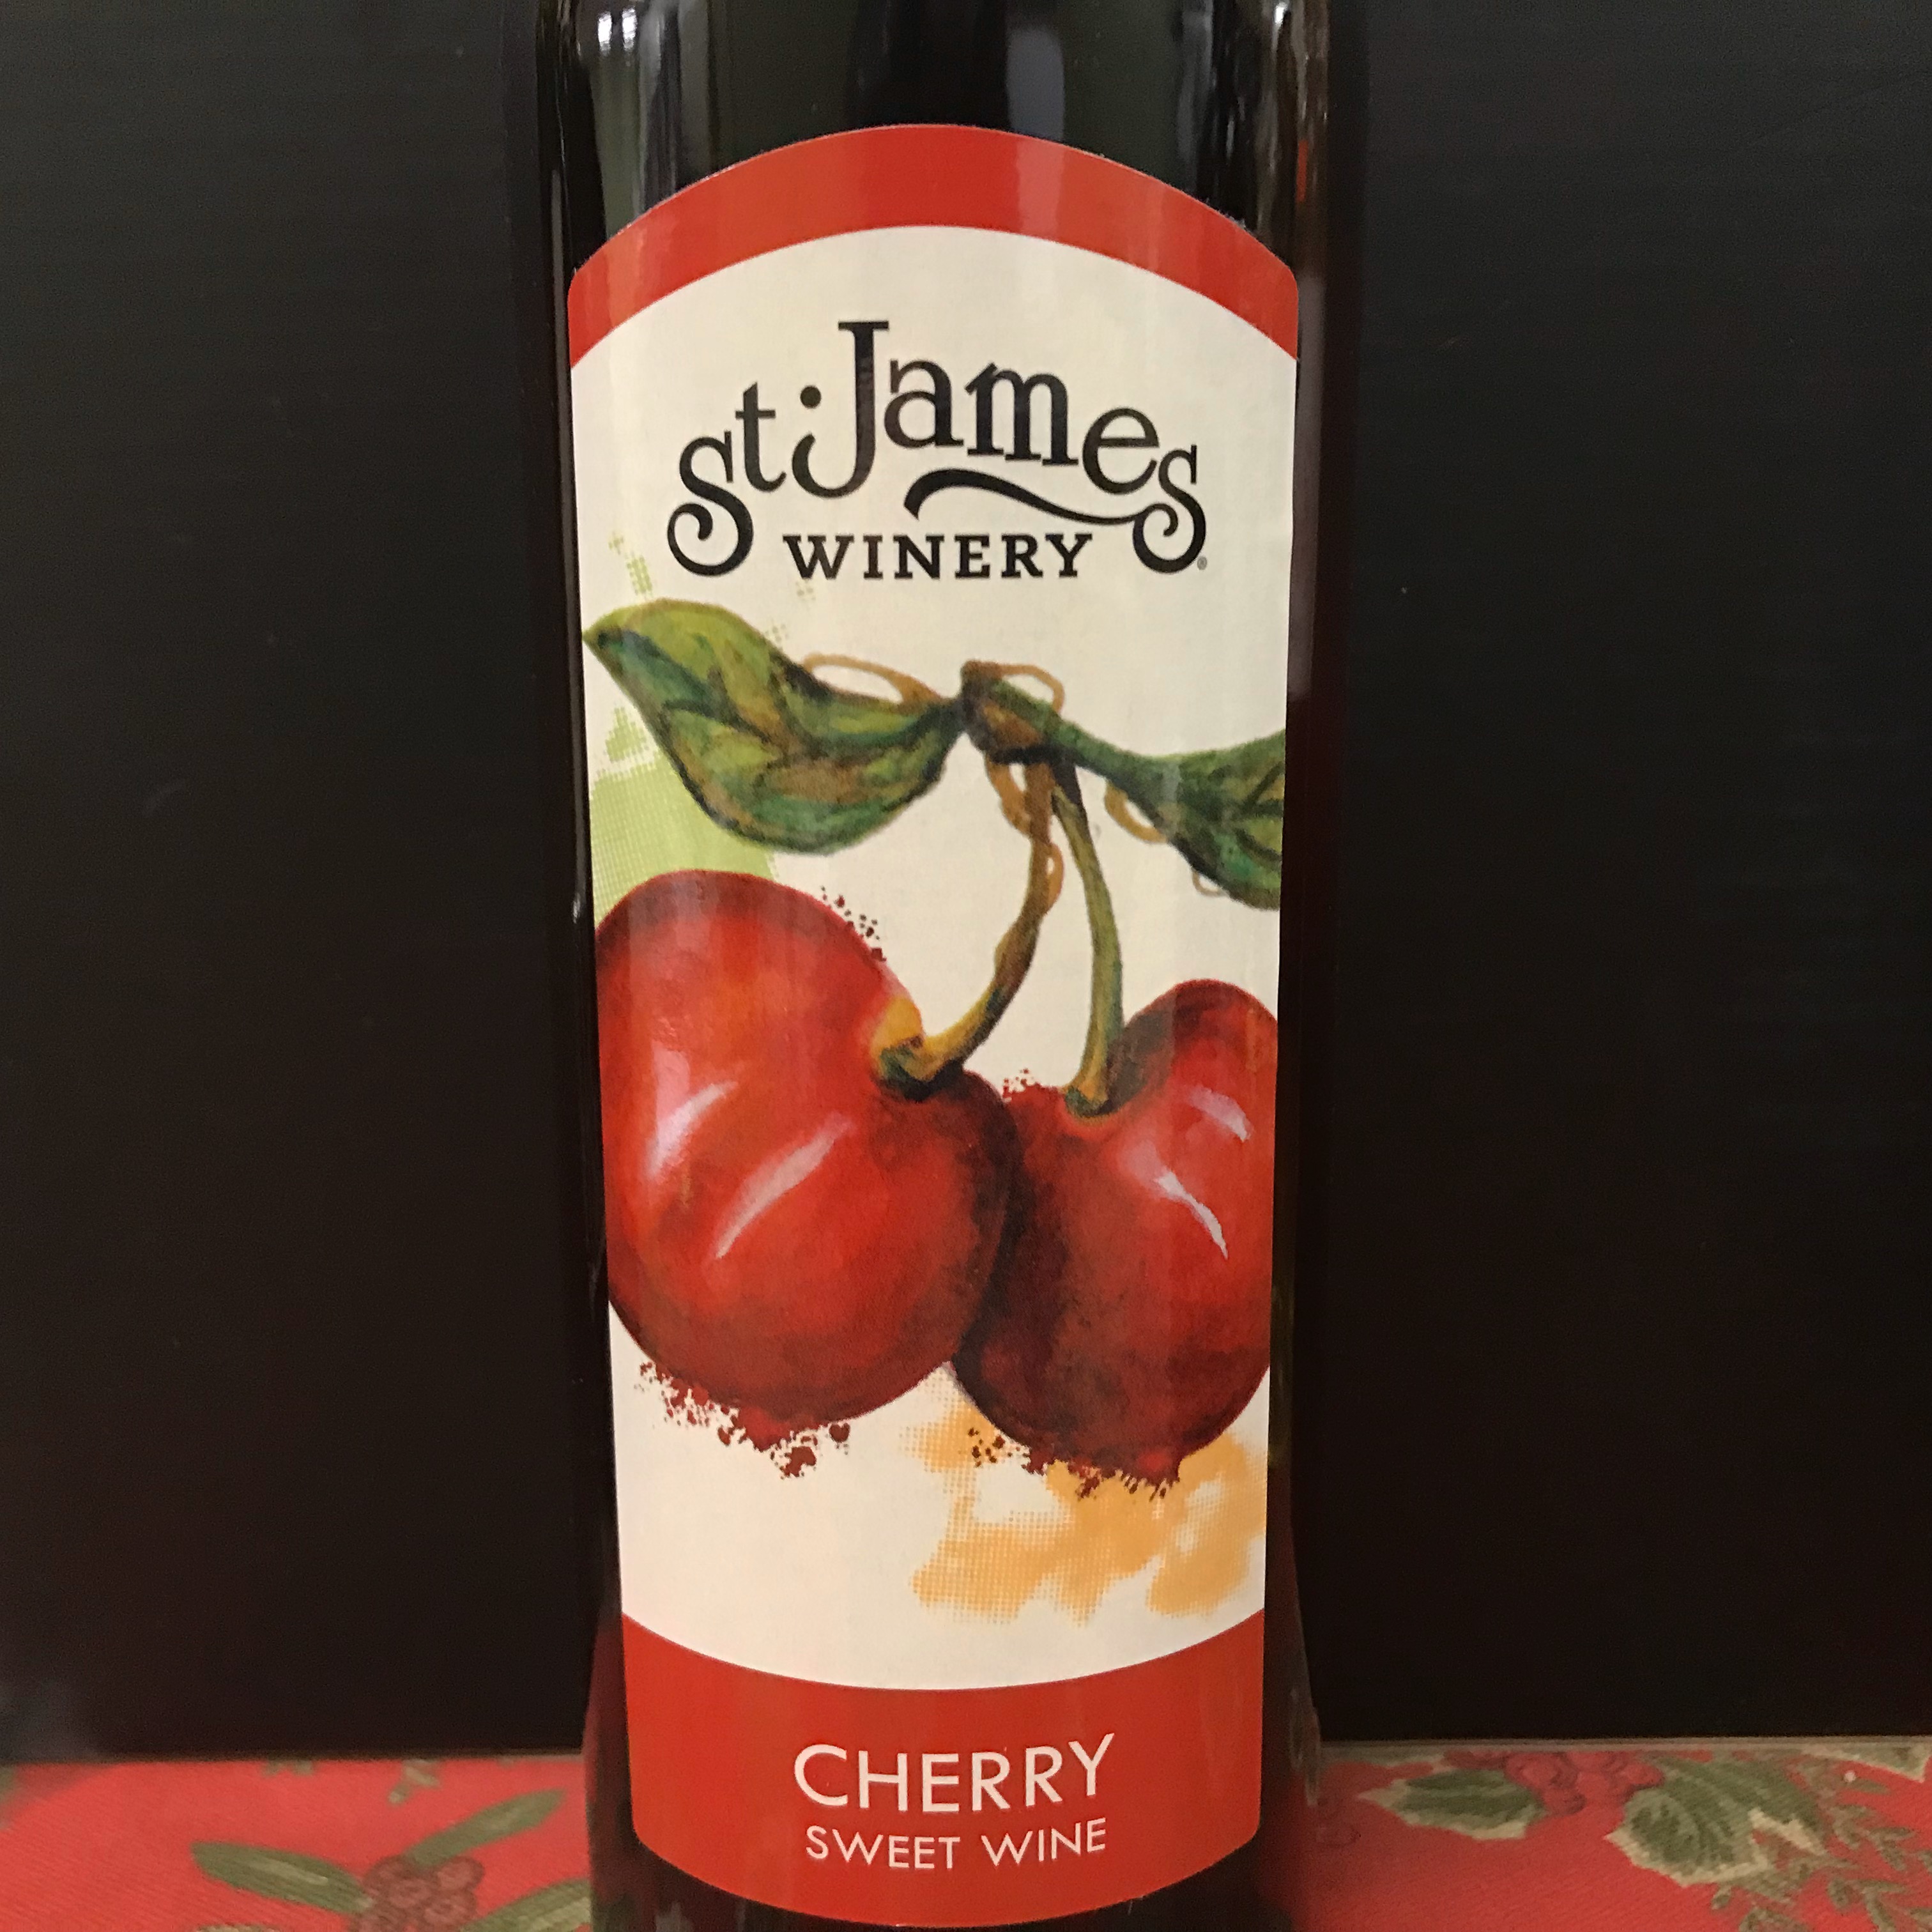 St.James Winery Cherry sweet wine